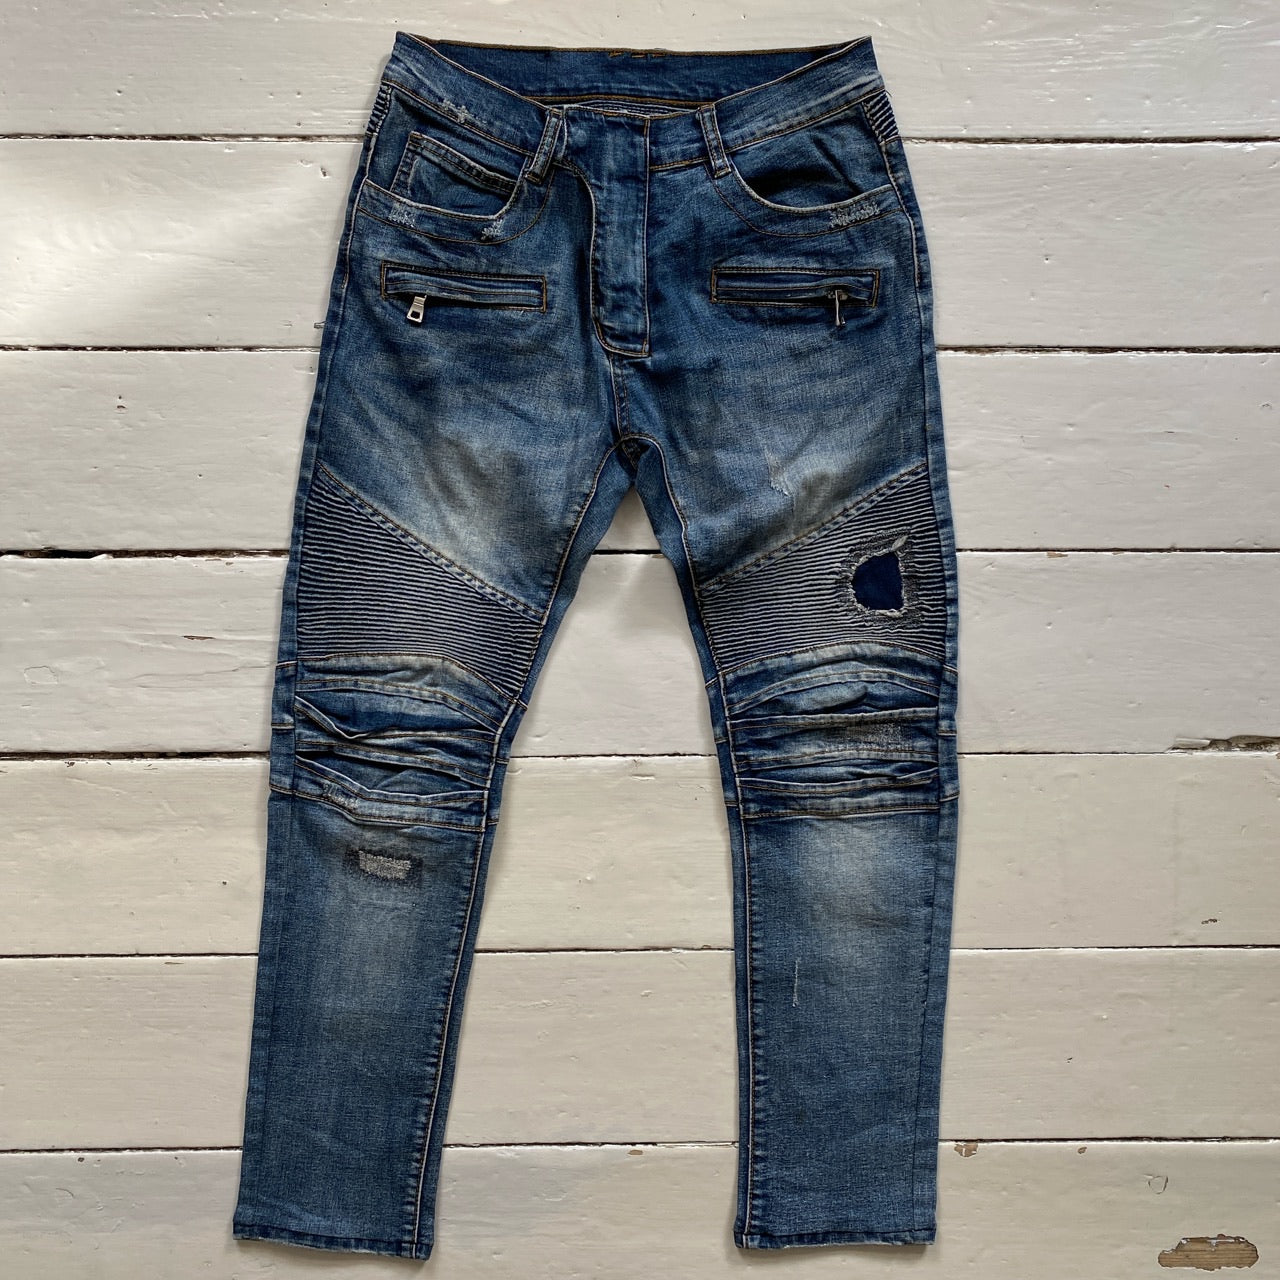 Balmain Biker Distressed Jeans (30/29)